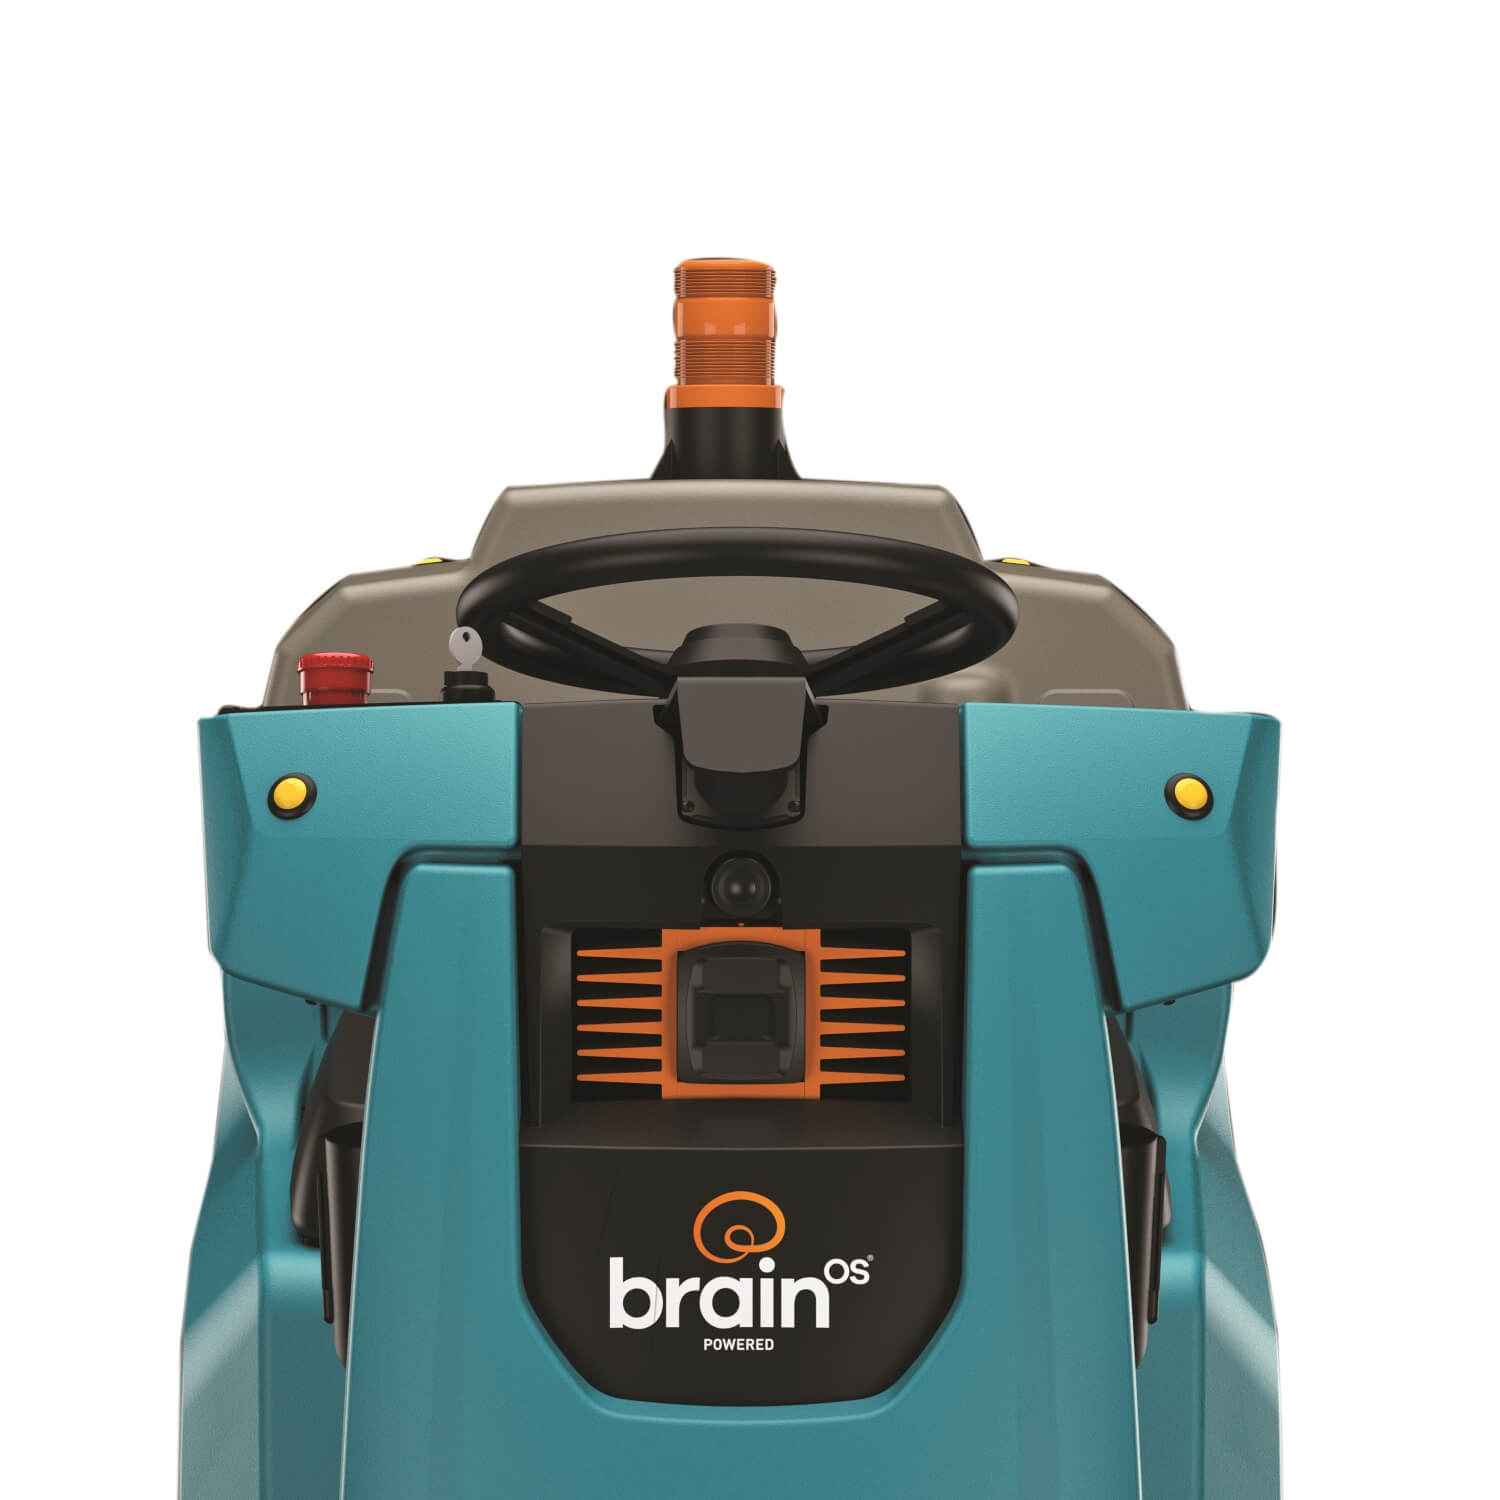 Autonome schrobzuigmachine Tennant T380 AMR sensoren Brain OS